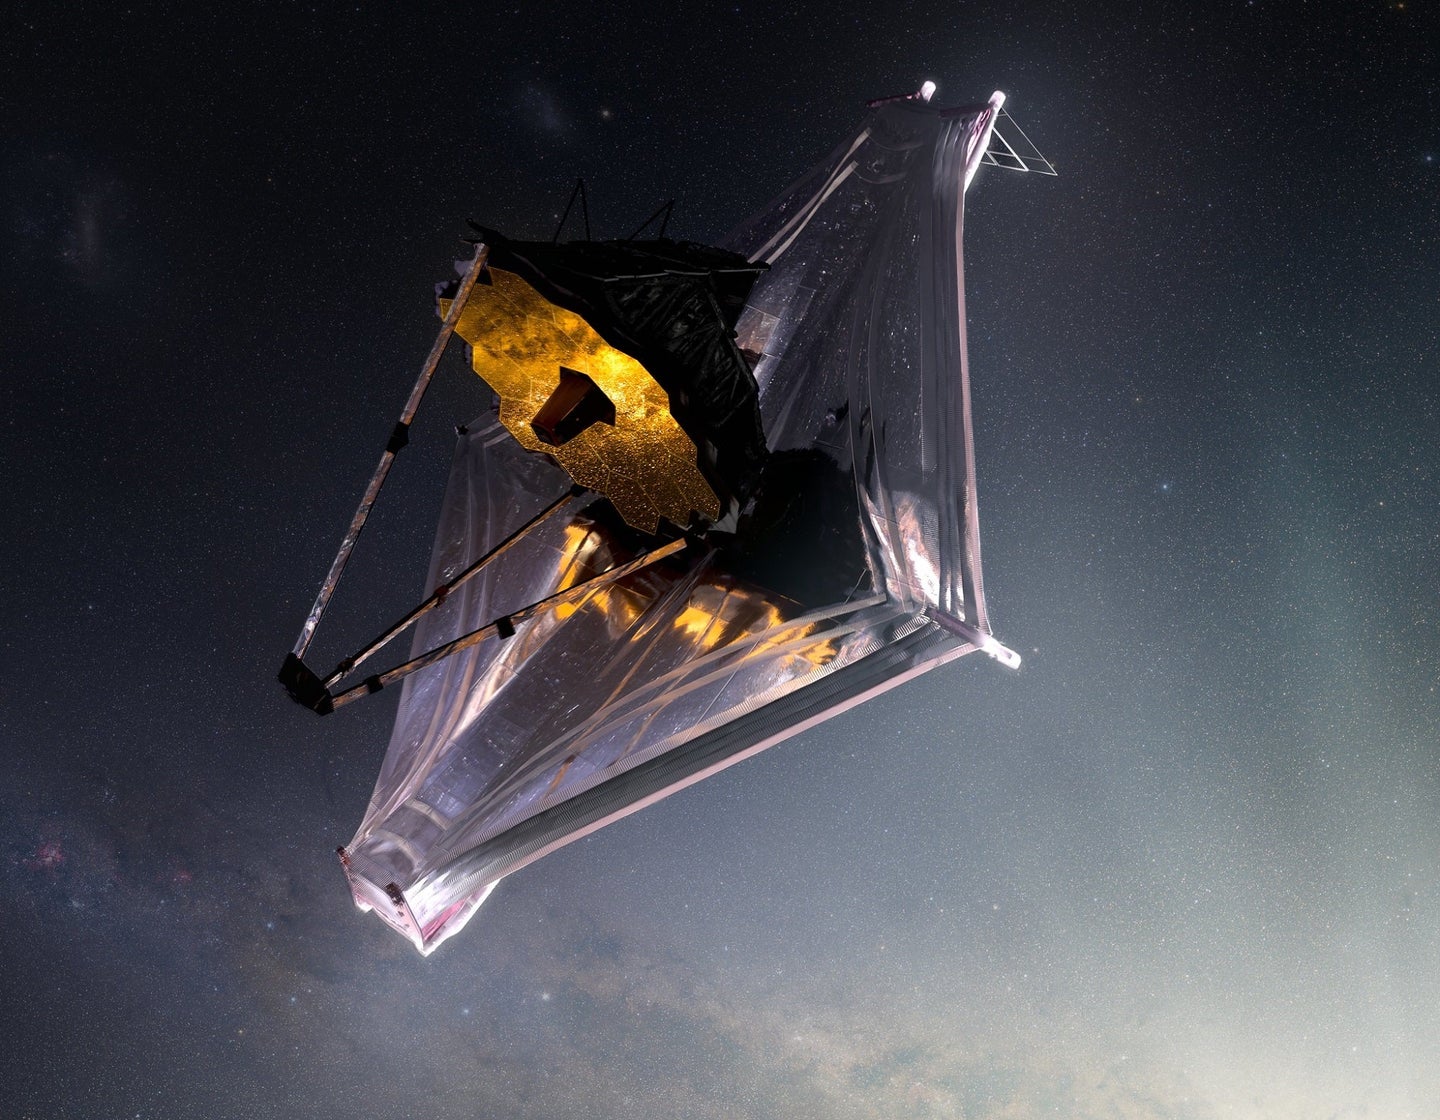 What the James Webb Space Telescope should look like when it finally unfurls beyond the Earth's atmosphere.